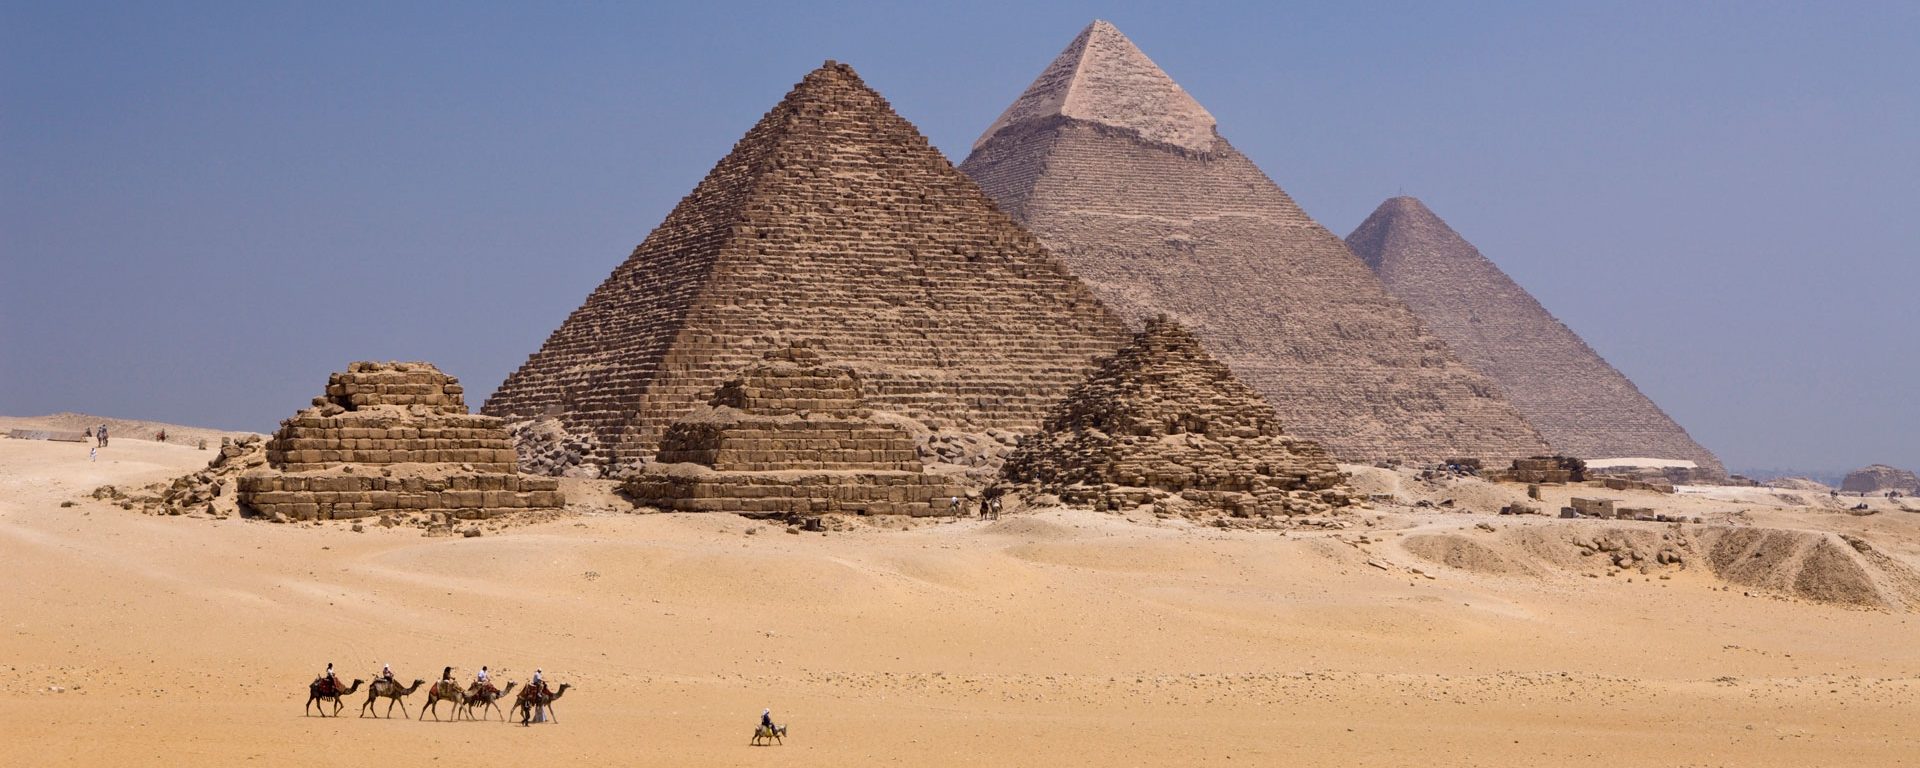 Pyramids of Giza near Cairo, Egypt